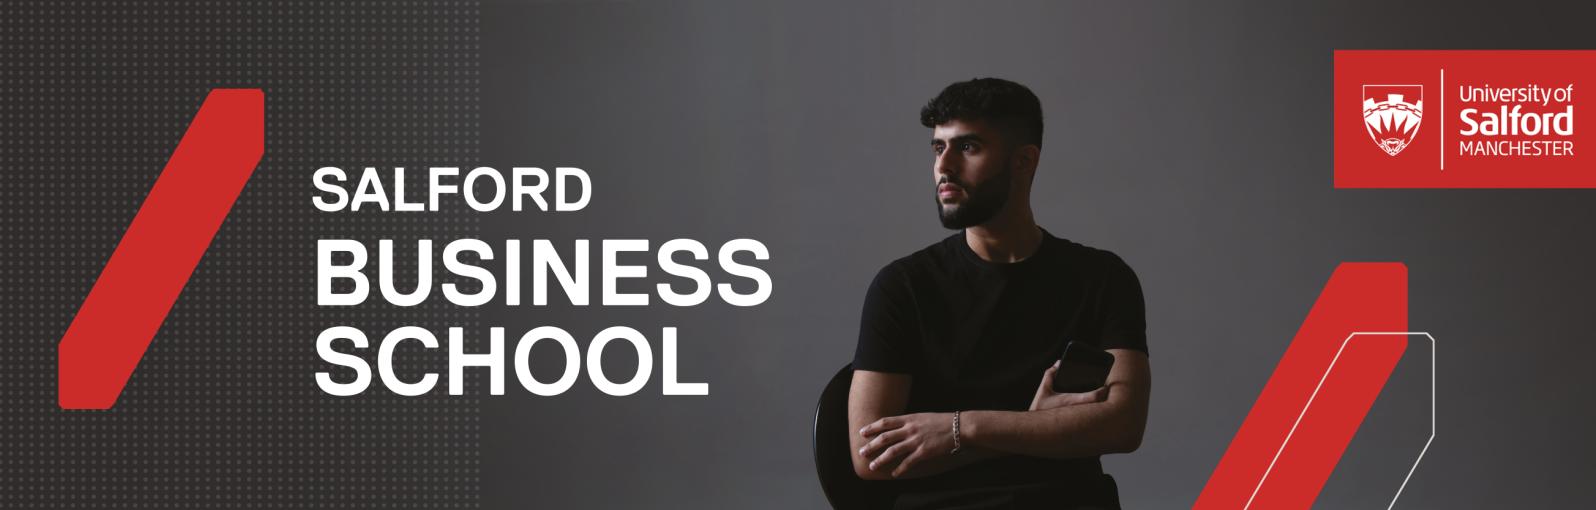 Salford Business School banner